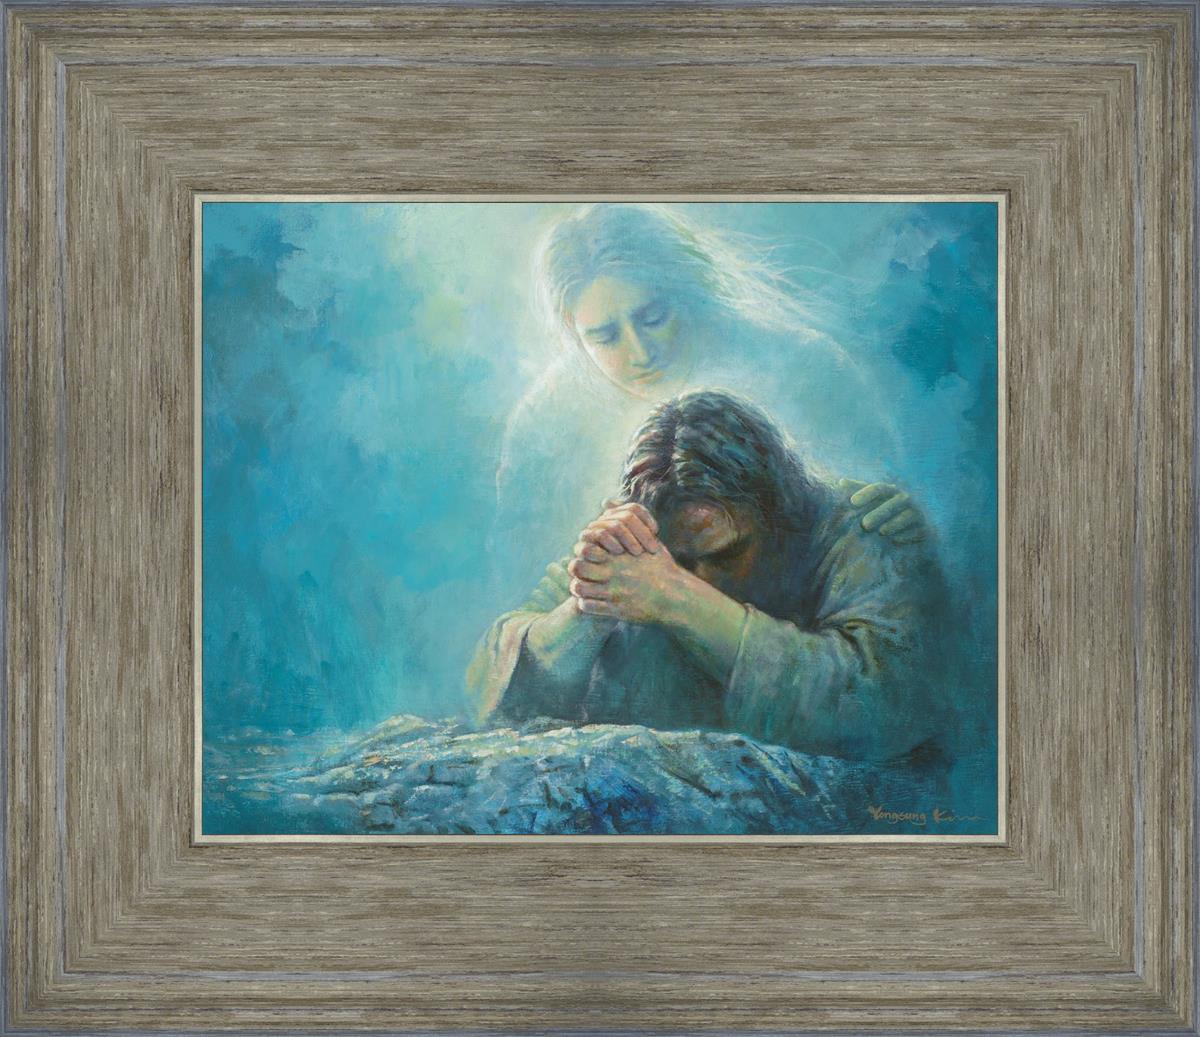 Gethsemane Prayer - Painting - Yongsung Kim | Havenlight ...